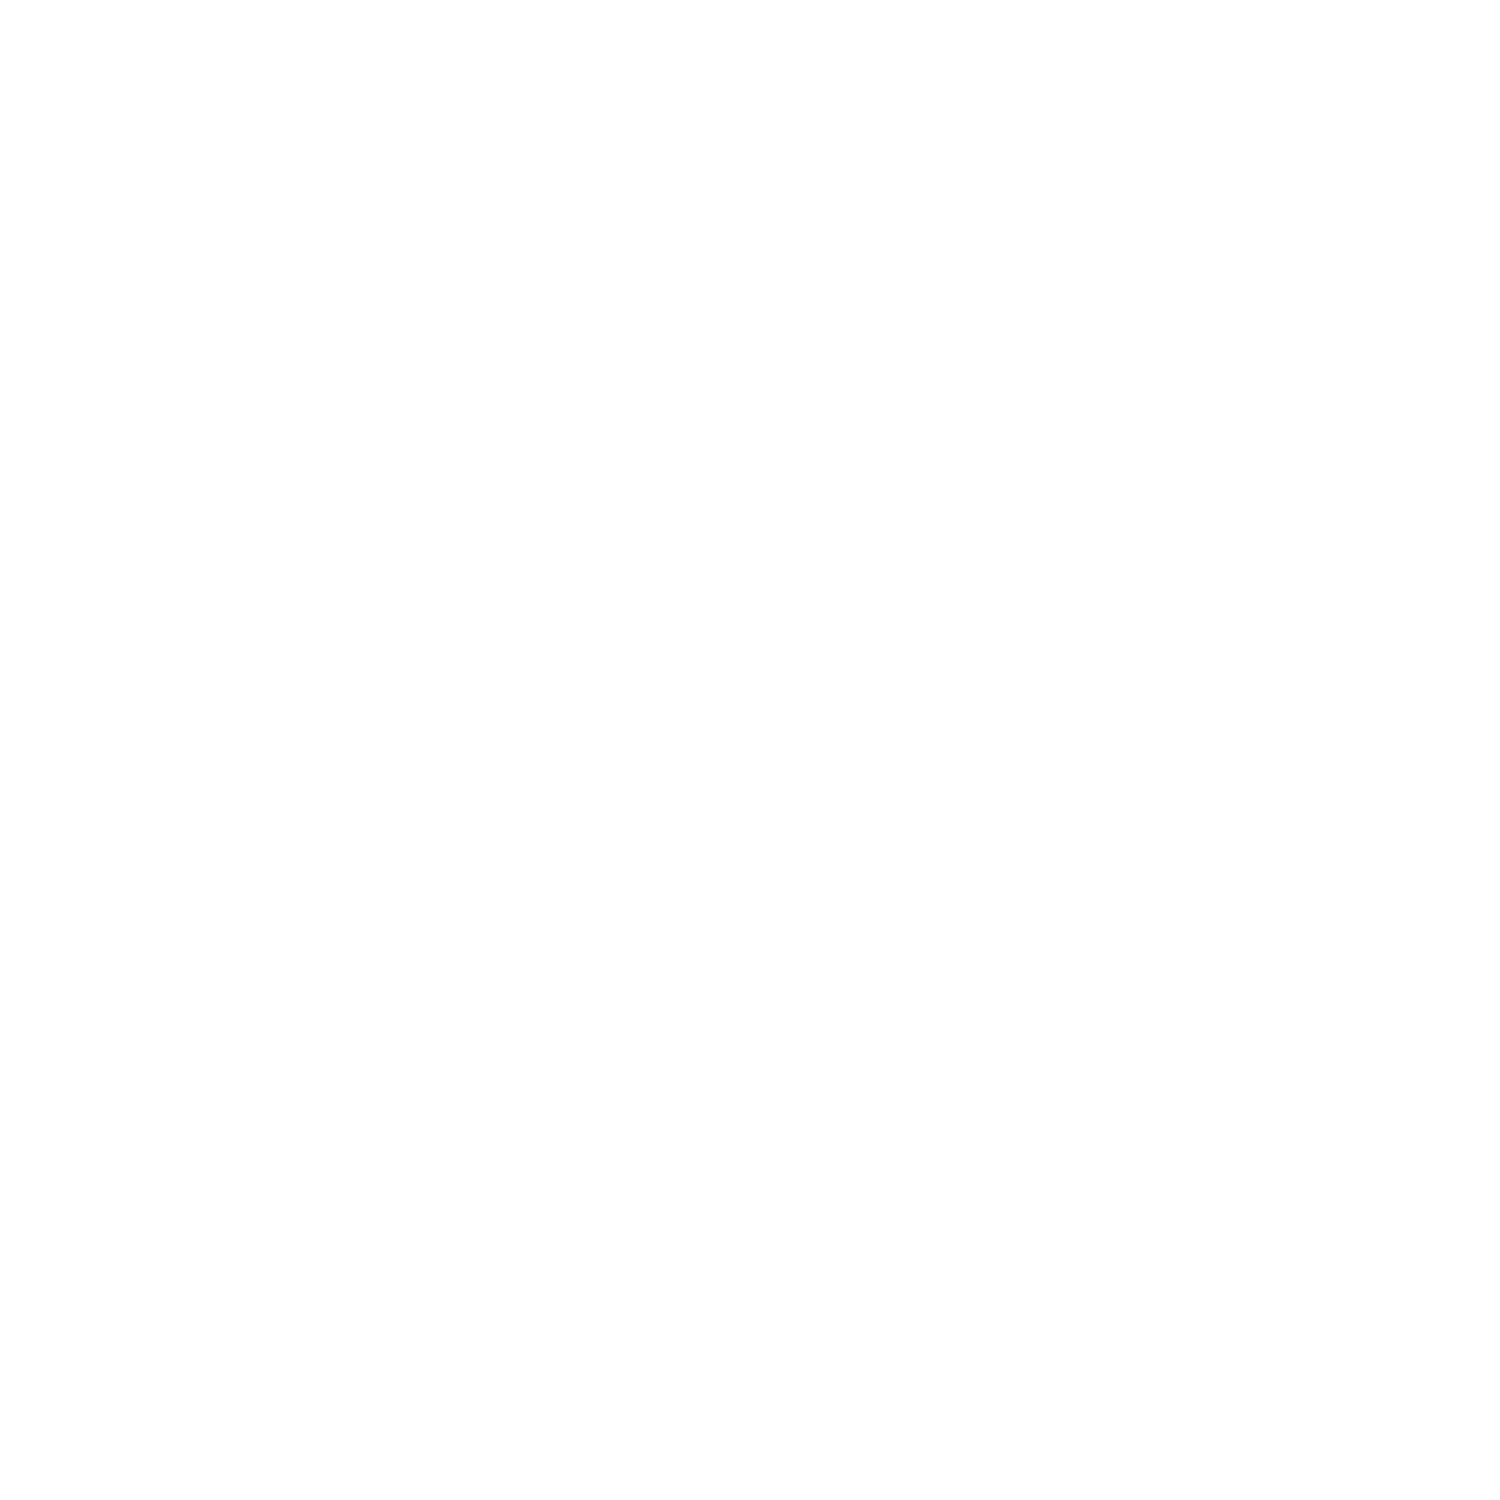 Balloon Society